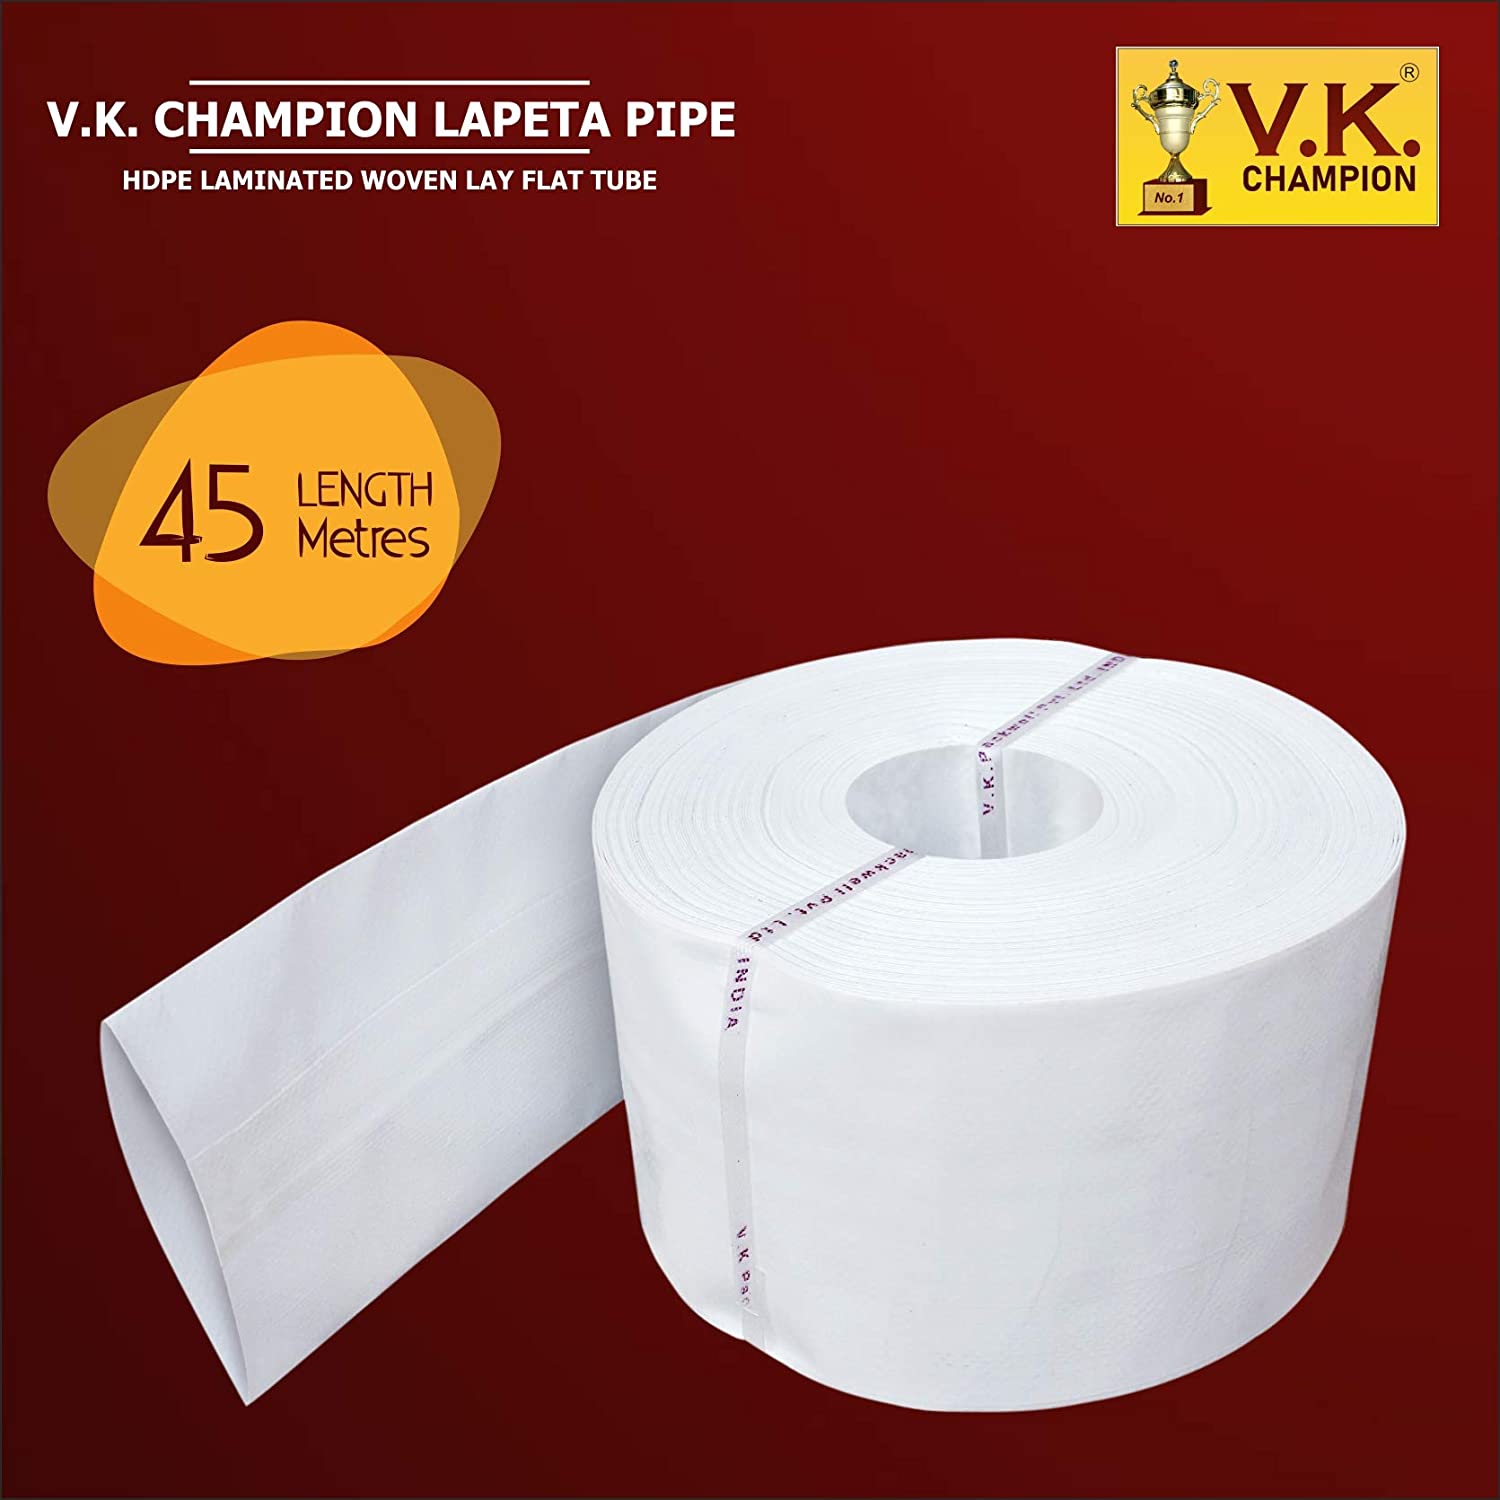 V.K. Champion HDPE Lapeta Pipe (45 Meter)